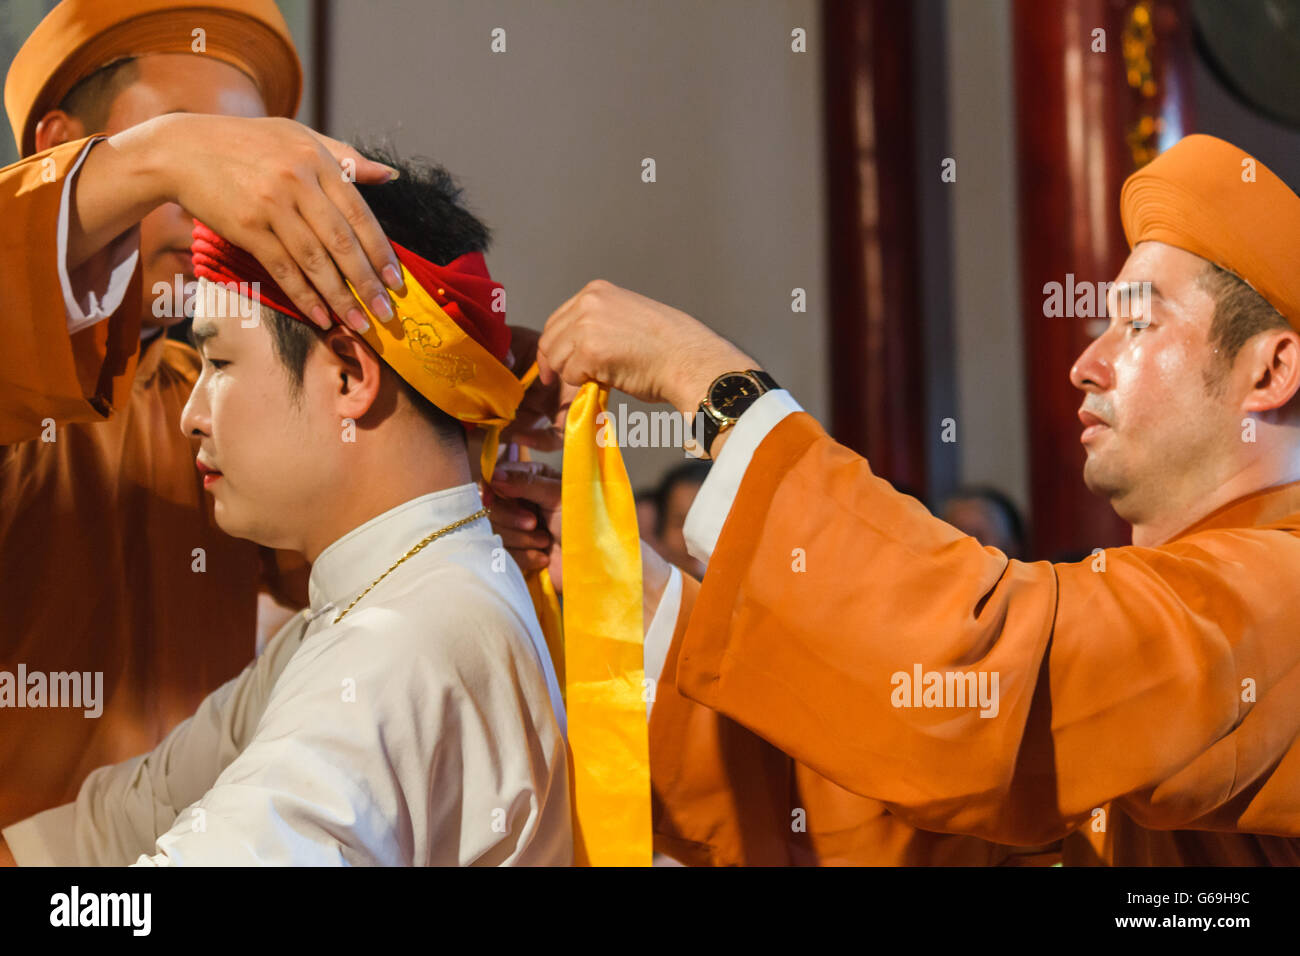 Medium being dressed up for spirit mediumship ritual in Vietnam Stock Photo